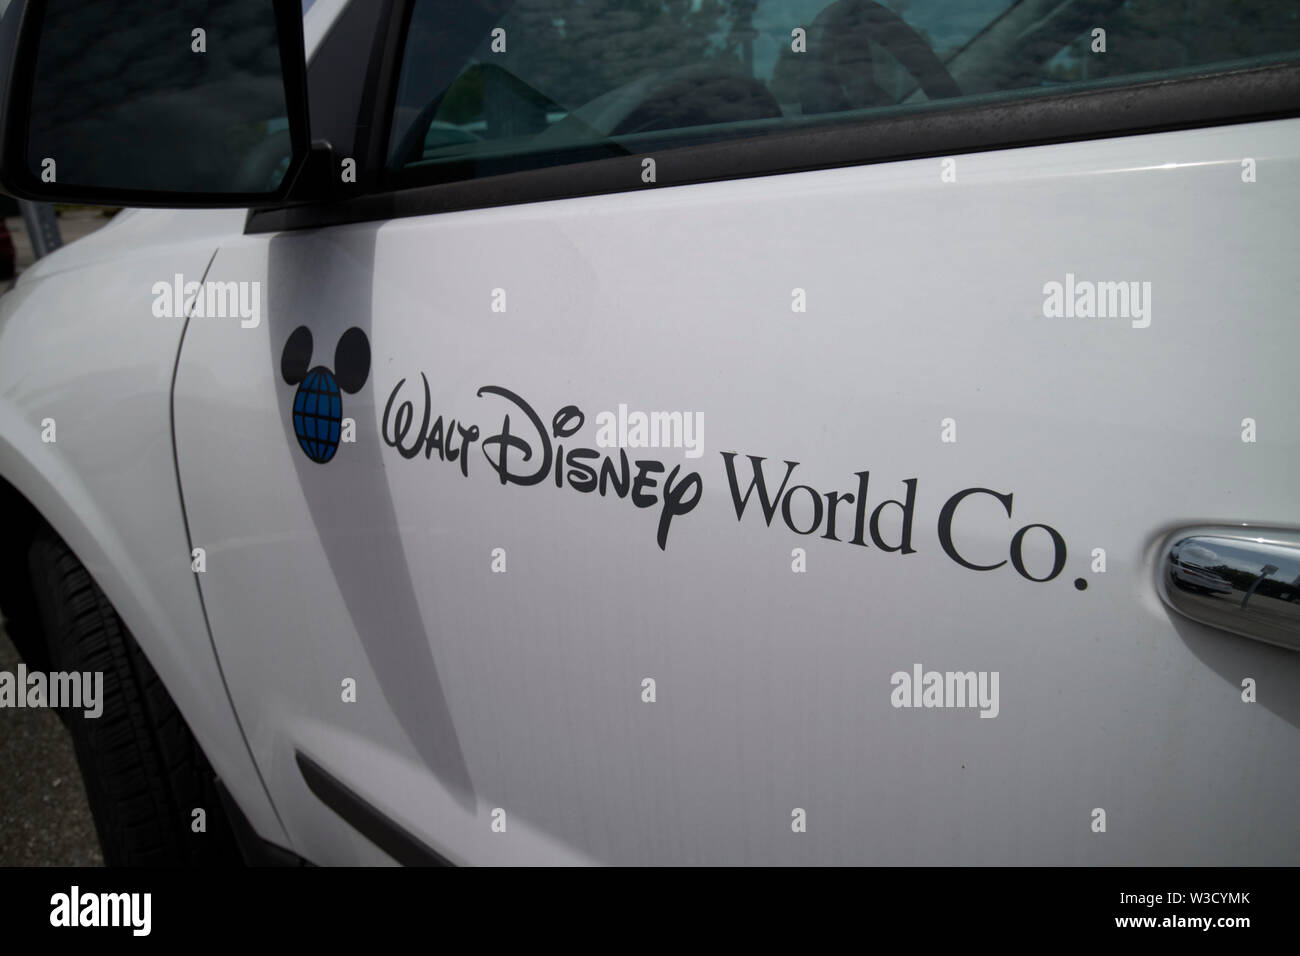 walt disney world co company name and logo on a vehicle florida united states of america Stock Photo